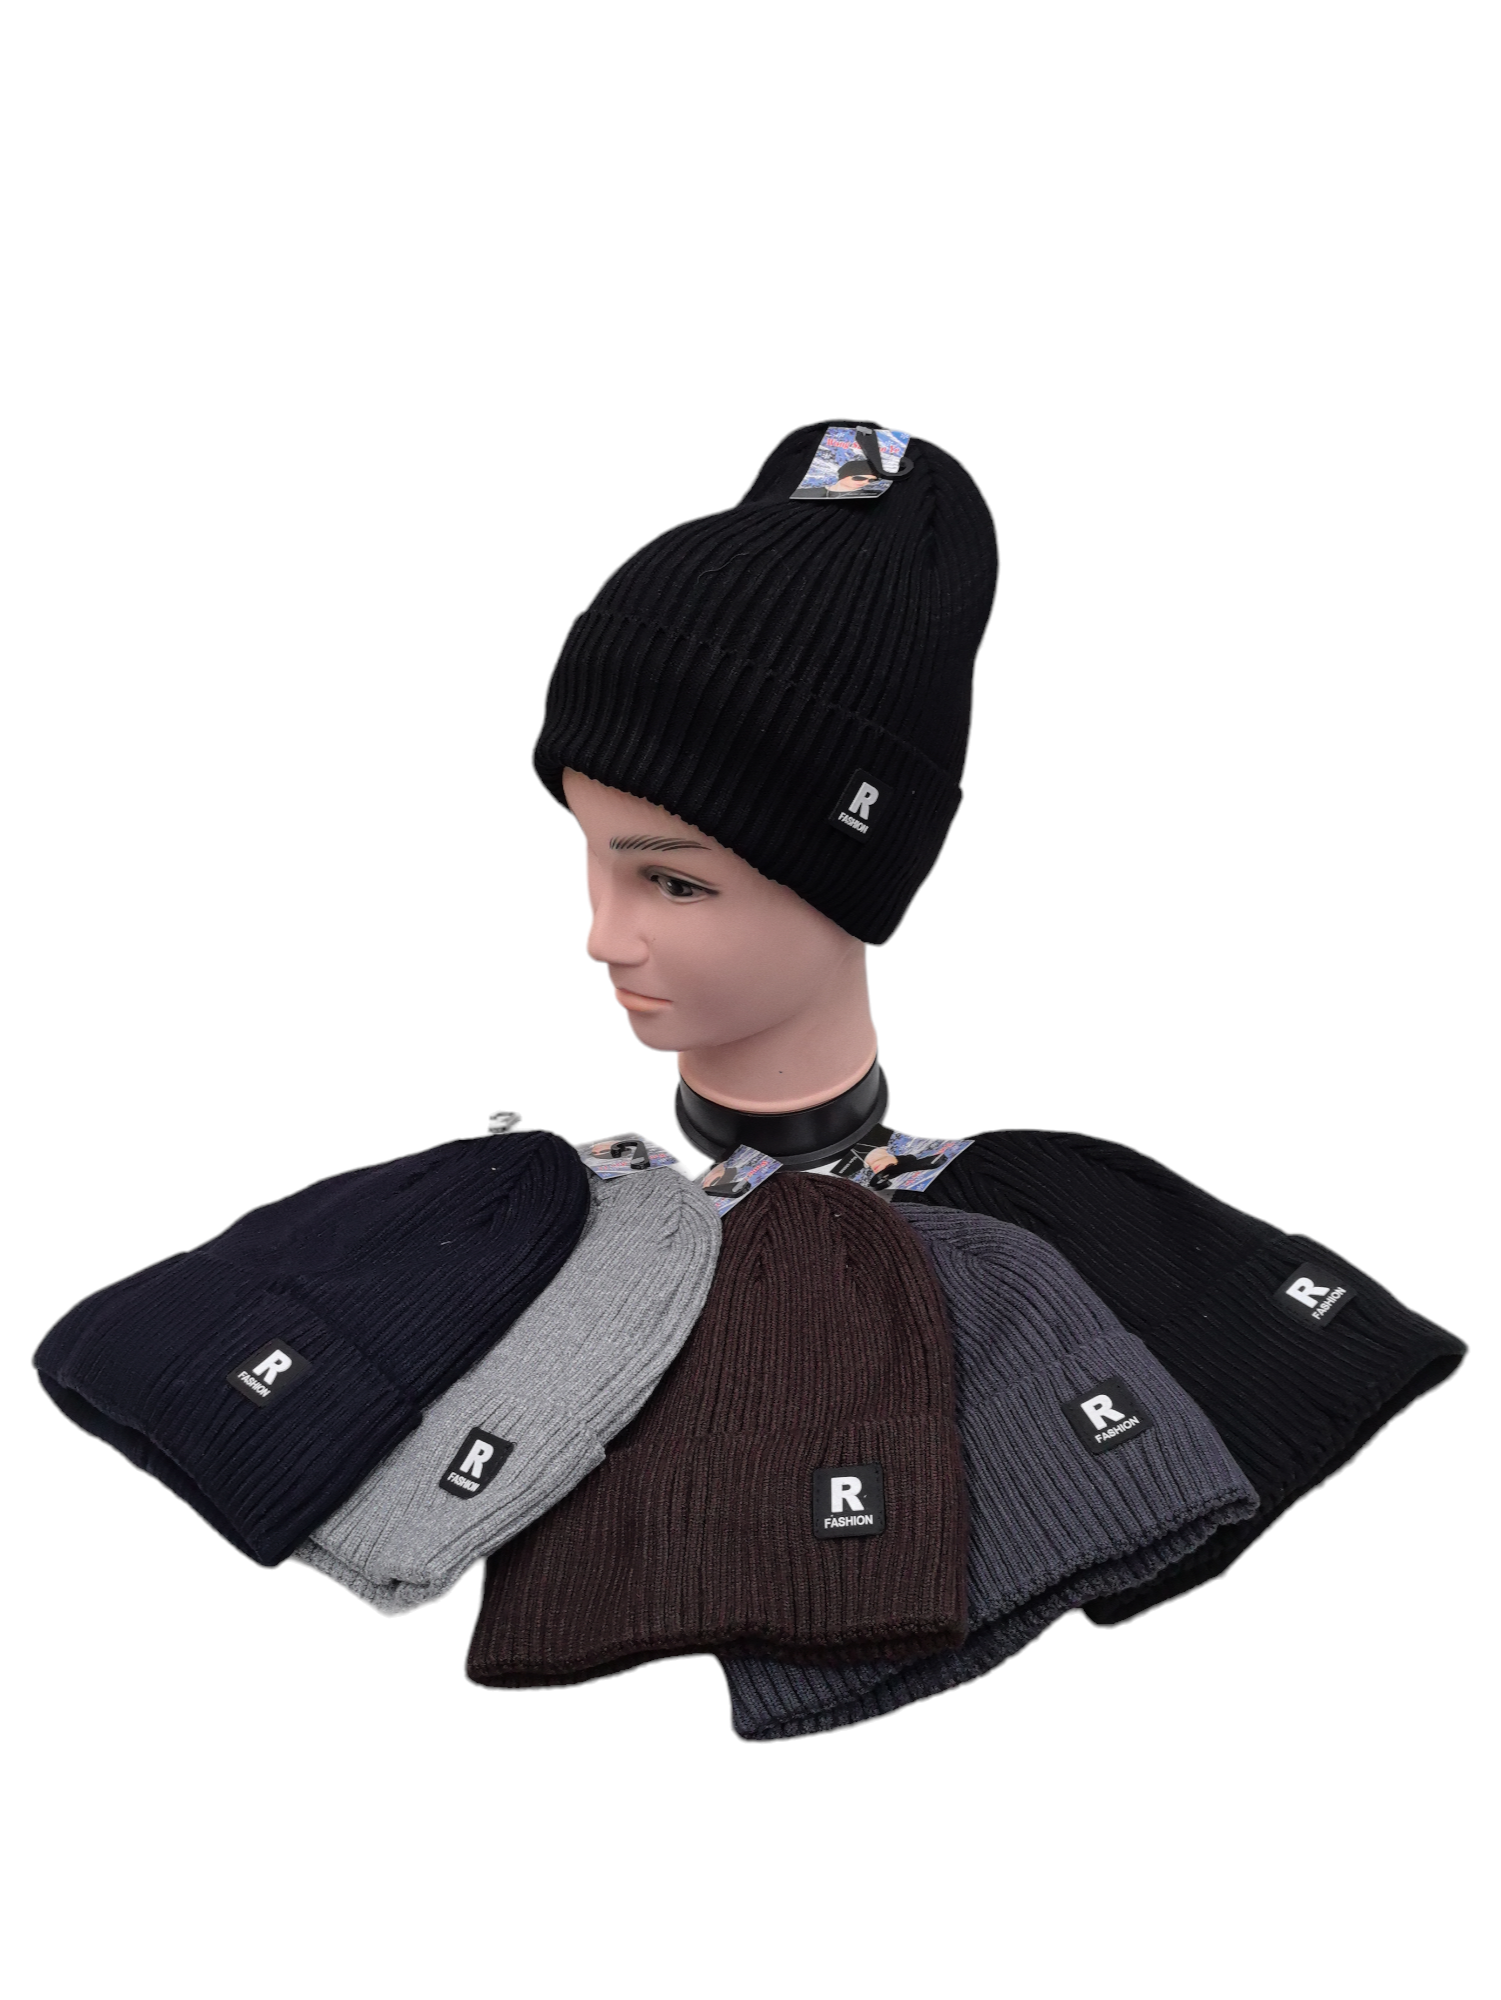 Casquette hiver tricot homme (x12)